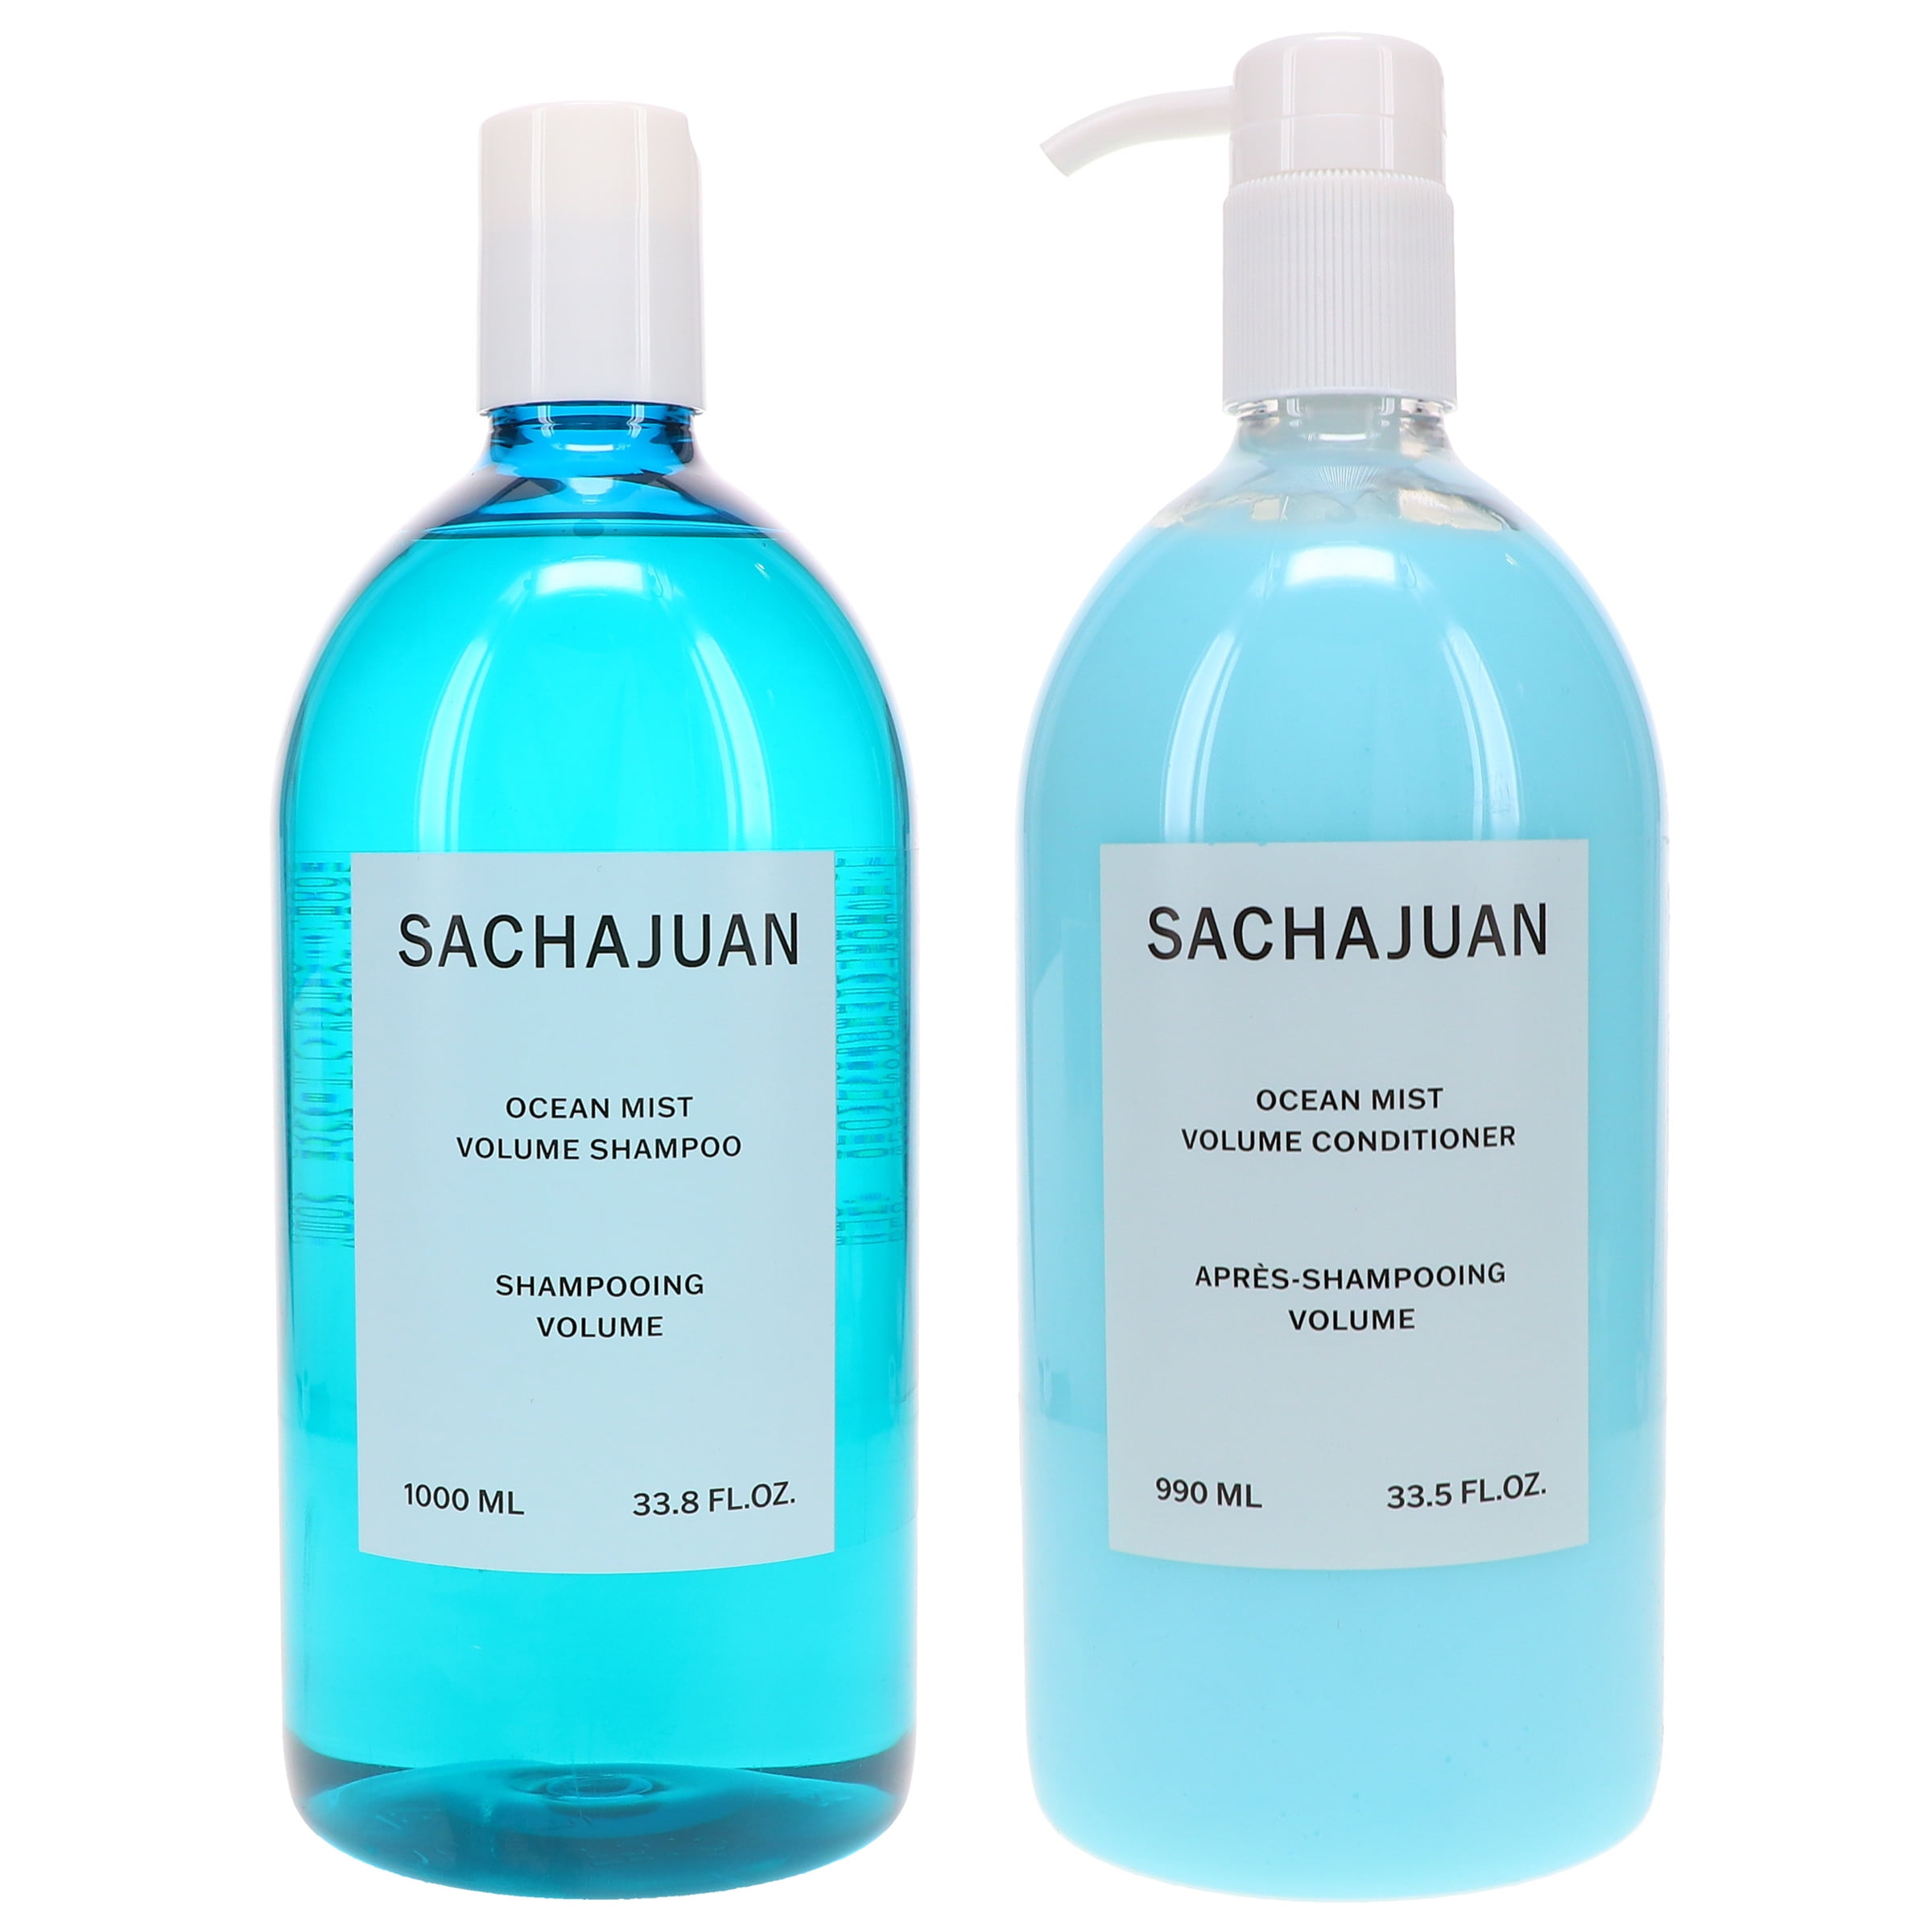 Sachajuan Ocean Mist Volume Shampoo oz & Ocean Mist Volume 33.5 oz Combo Pack Walmart.com